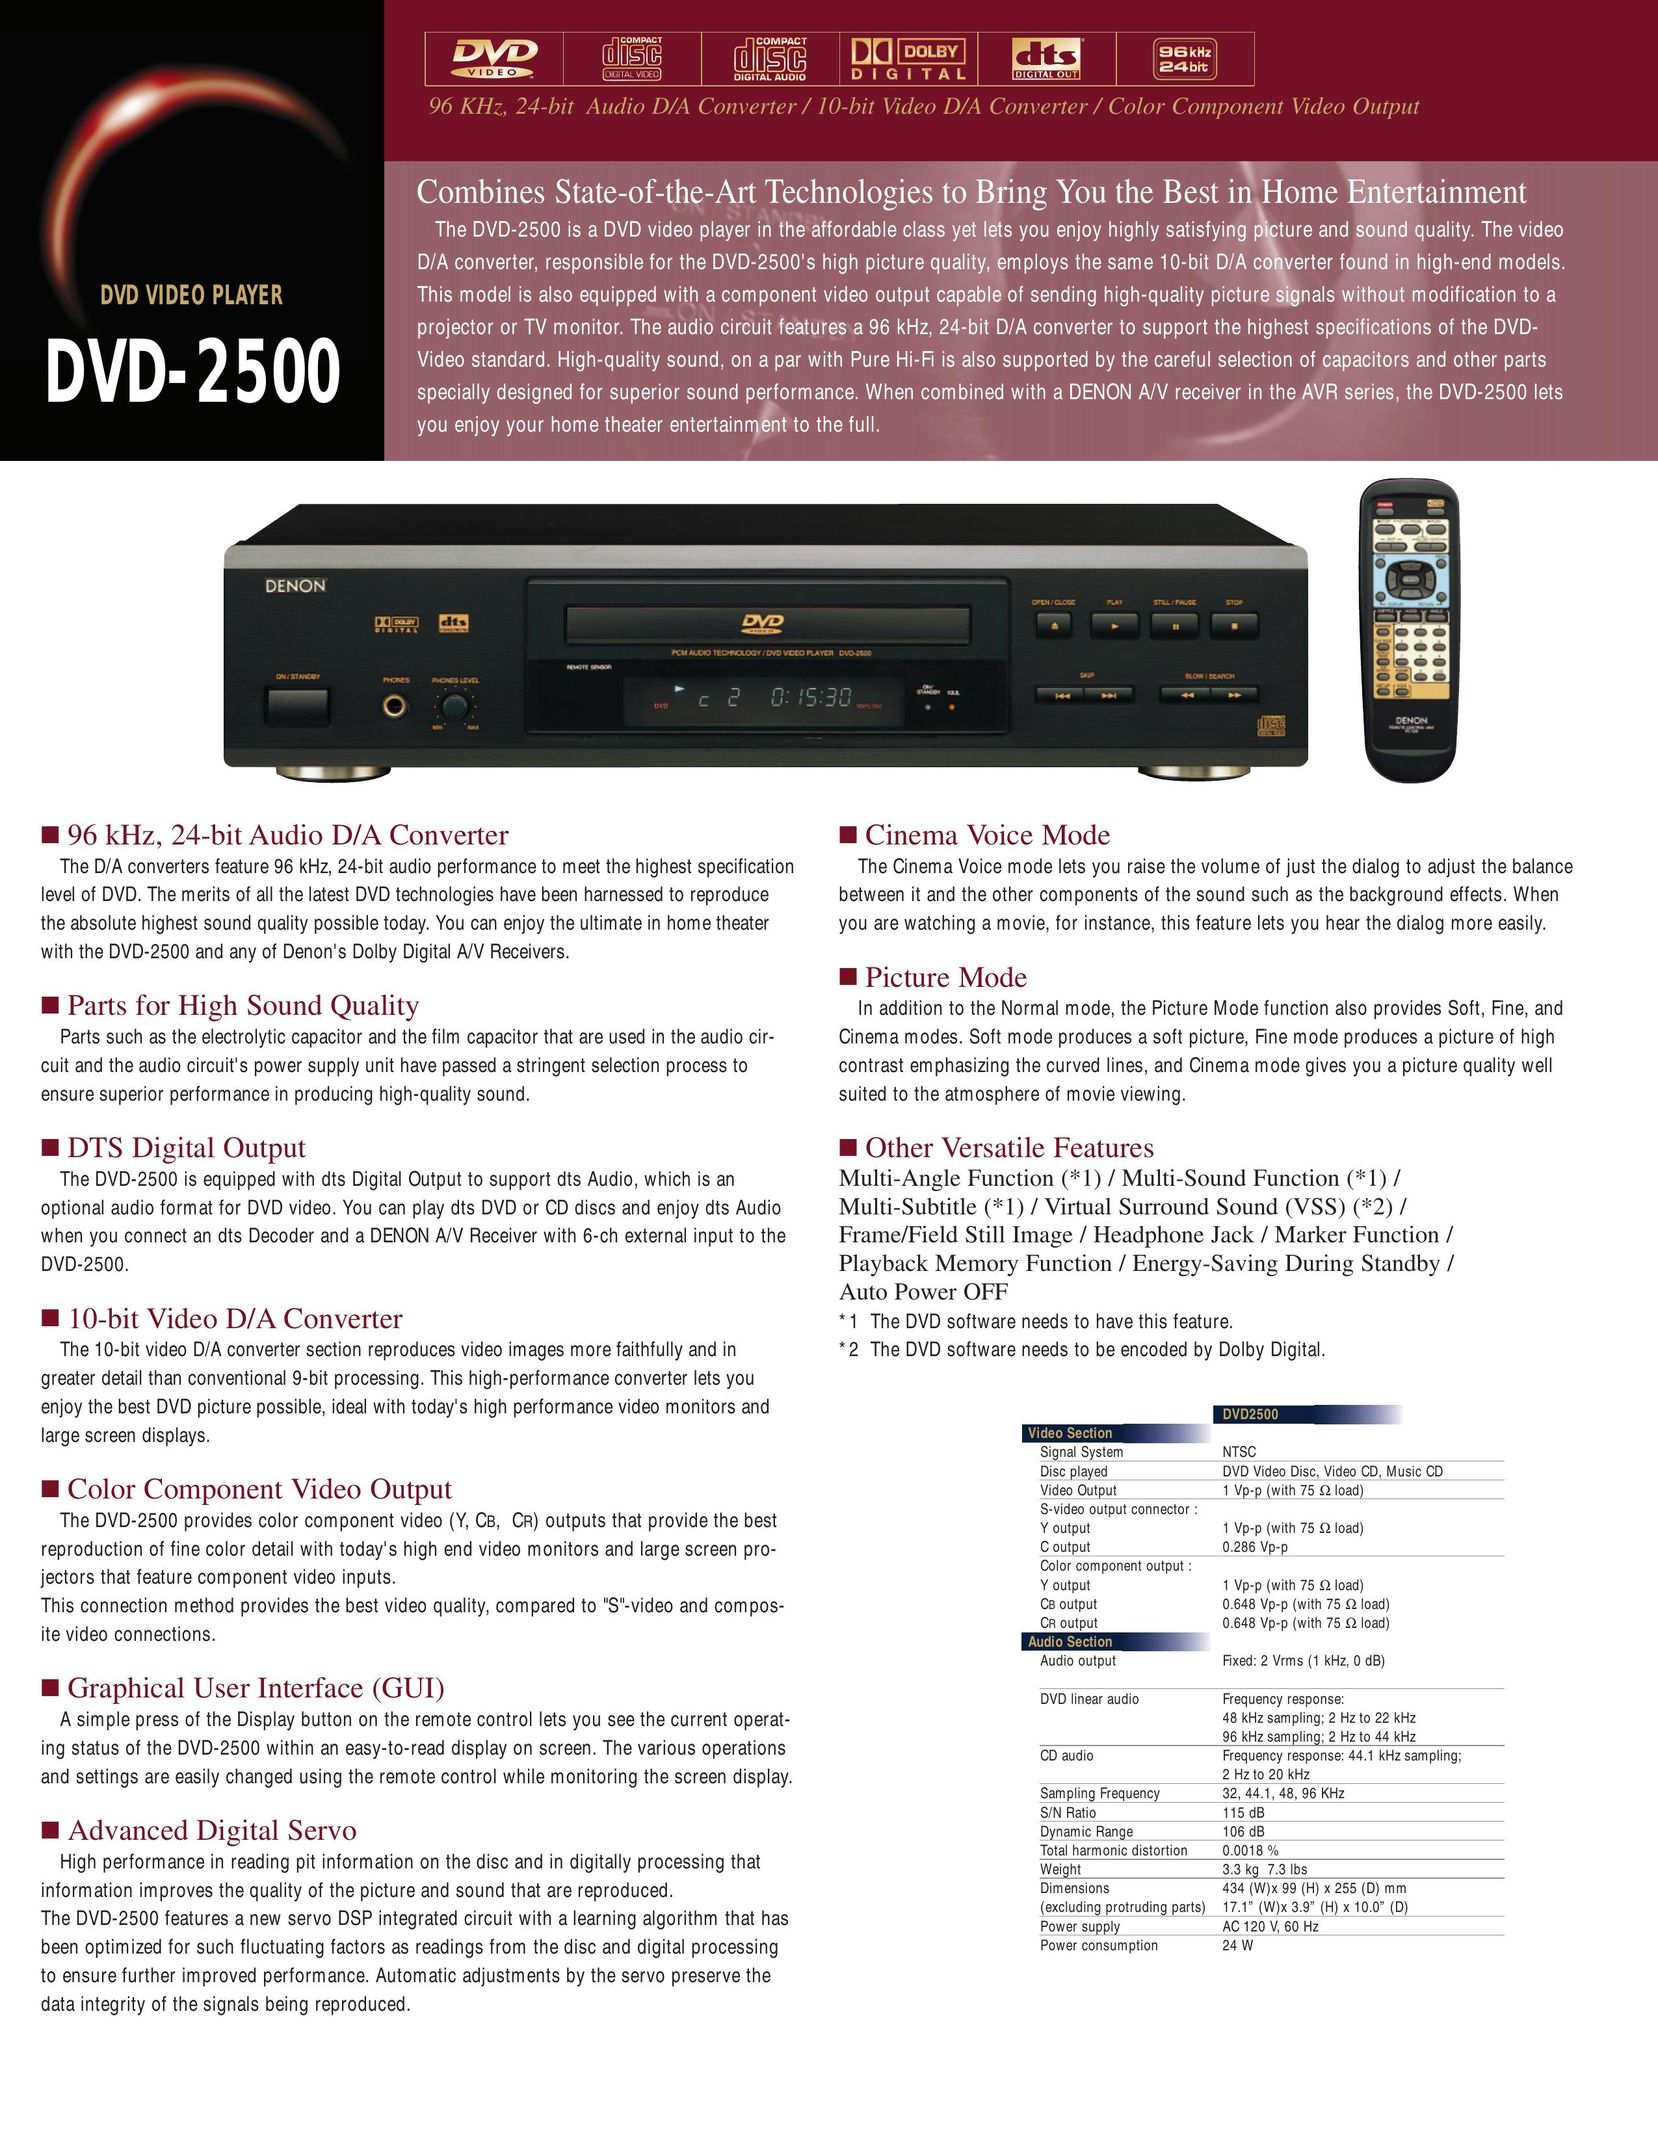 Denon DVD-2500 DVD Player User Manual